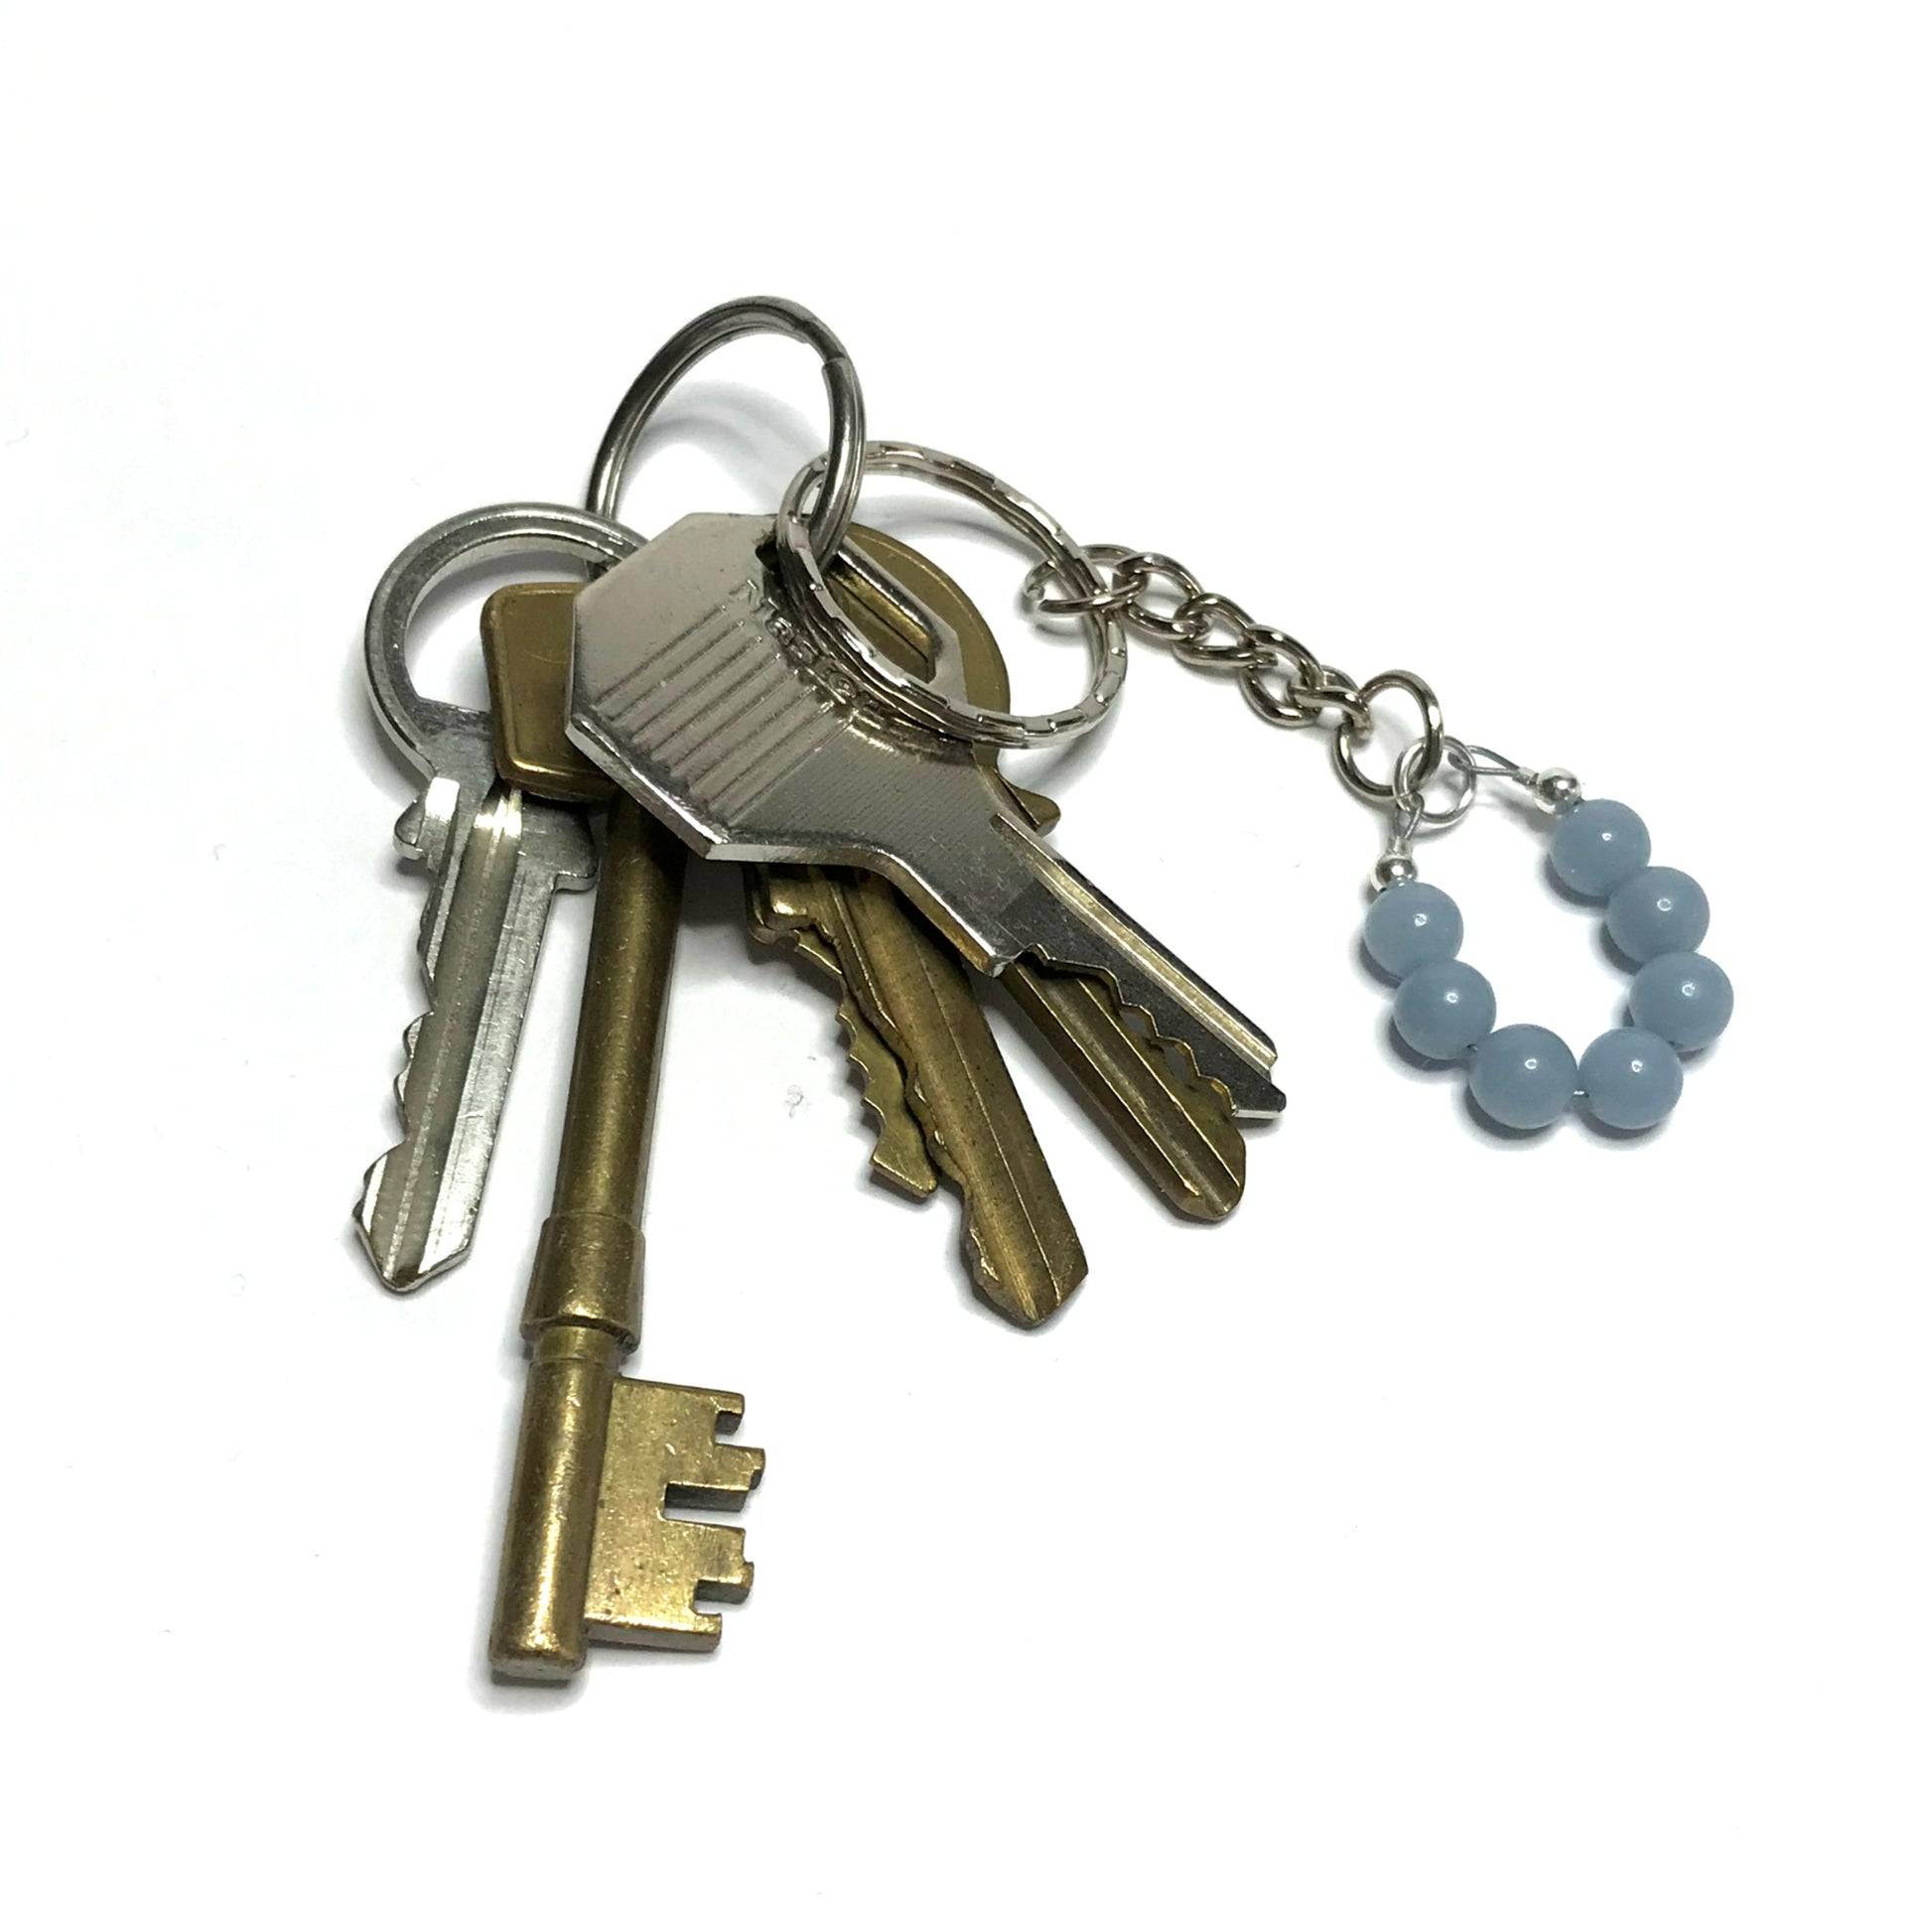 Angelite keychain with keys